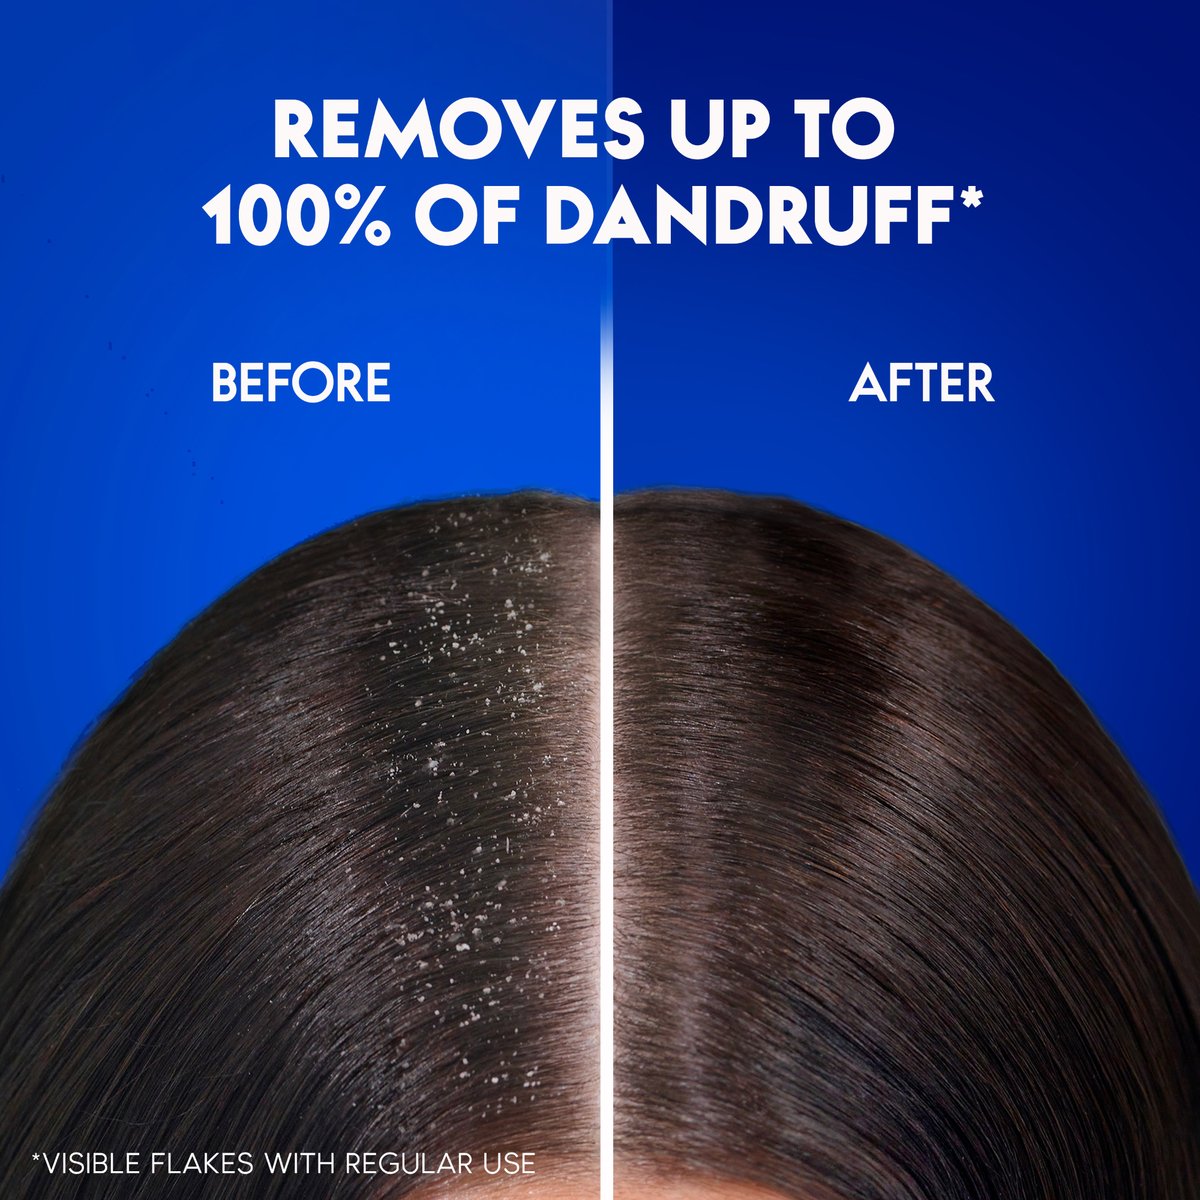 Head & Shoulders Classic Clean Anti-Dandruff Shampoo for Normal Hair 400 ml + 200 ml